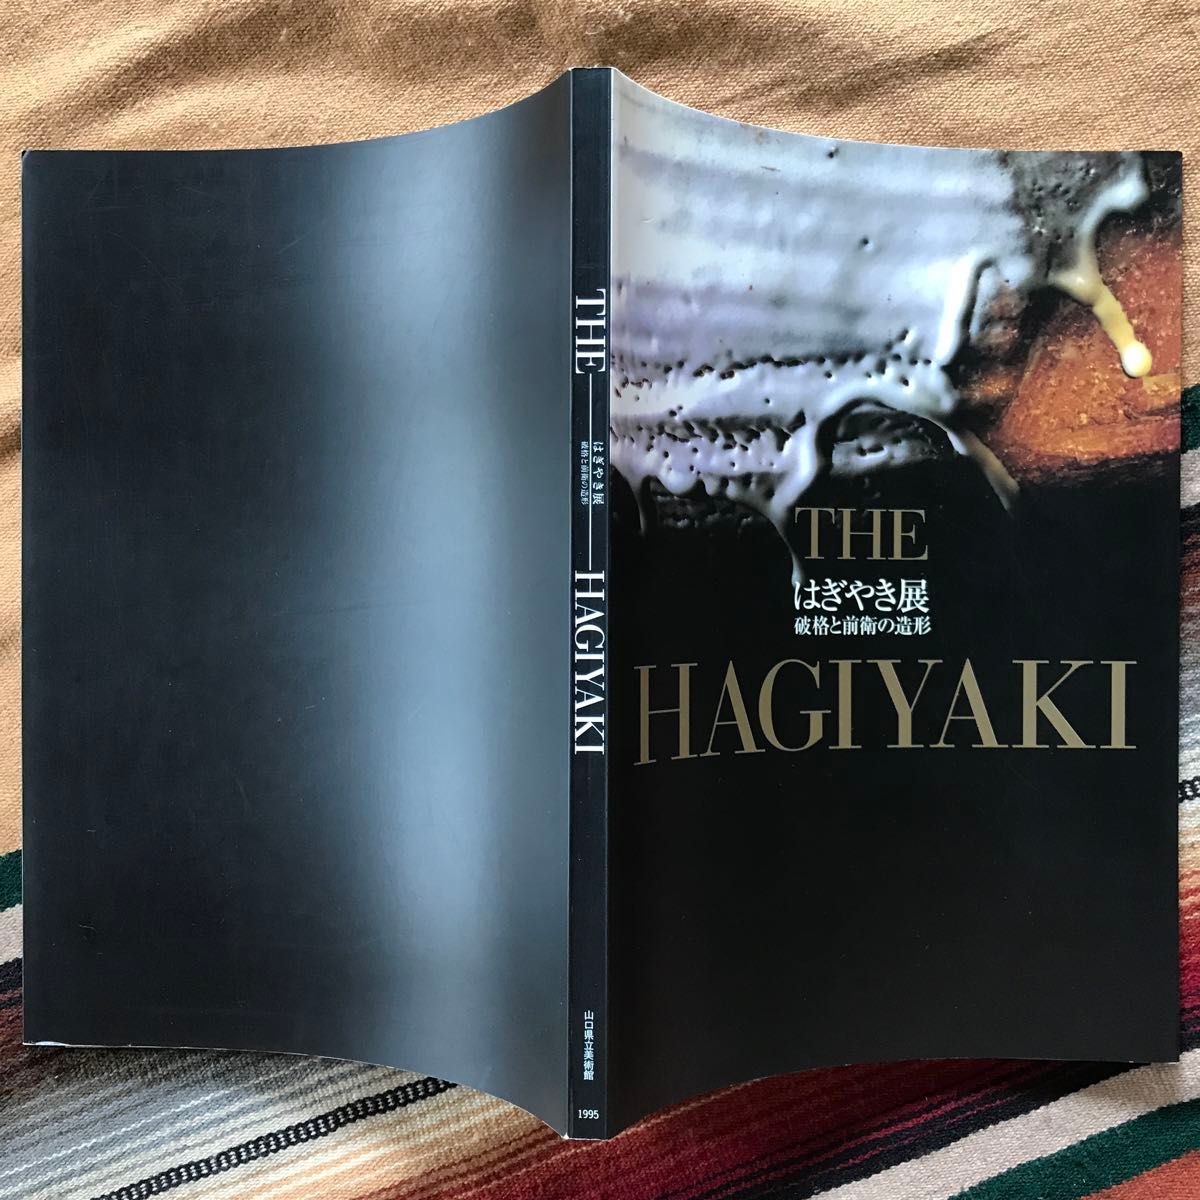 THE HAGIYAKI はぎやき展 破格と前衛の造形 図録 山口県立美術館